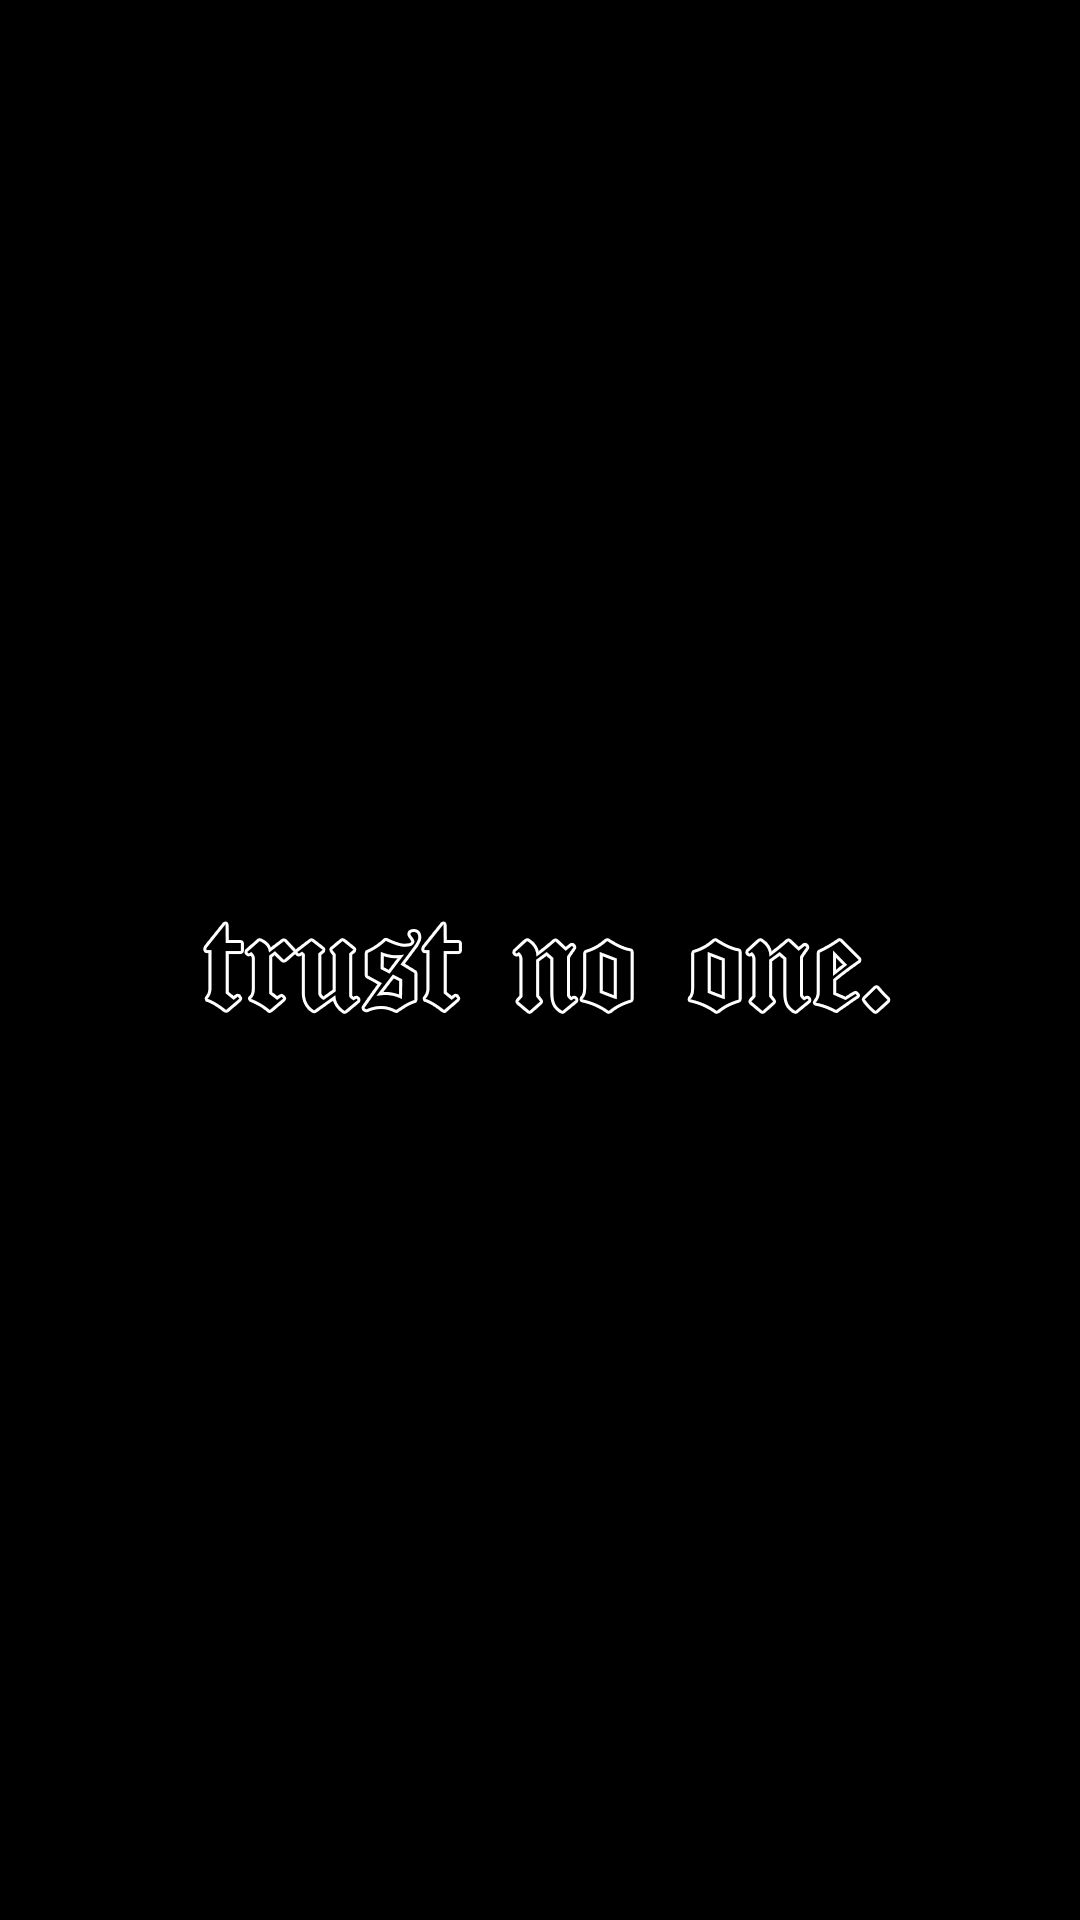 trust no one. WALLPAPER by; xxscratch. Trust no